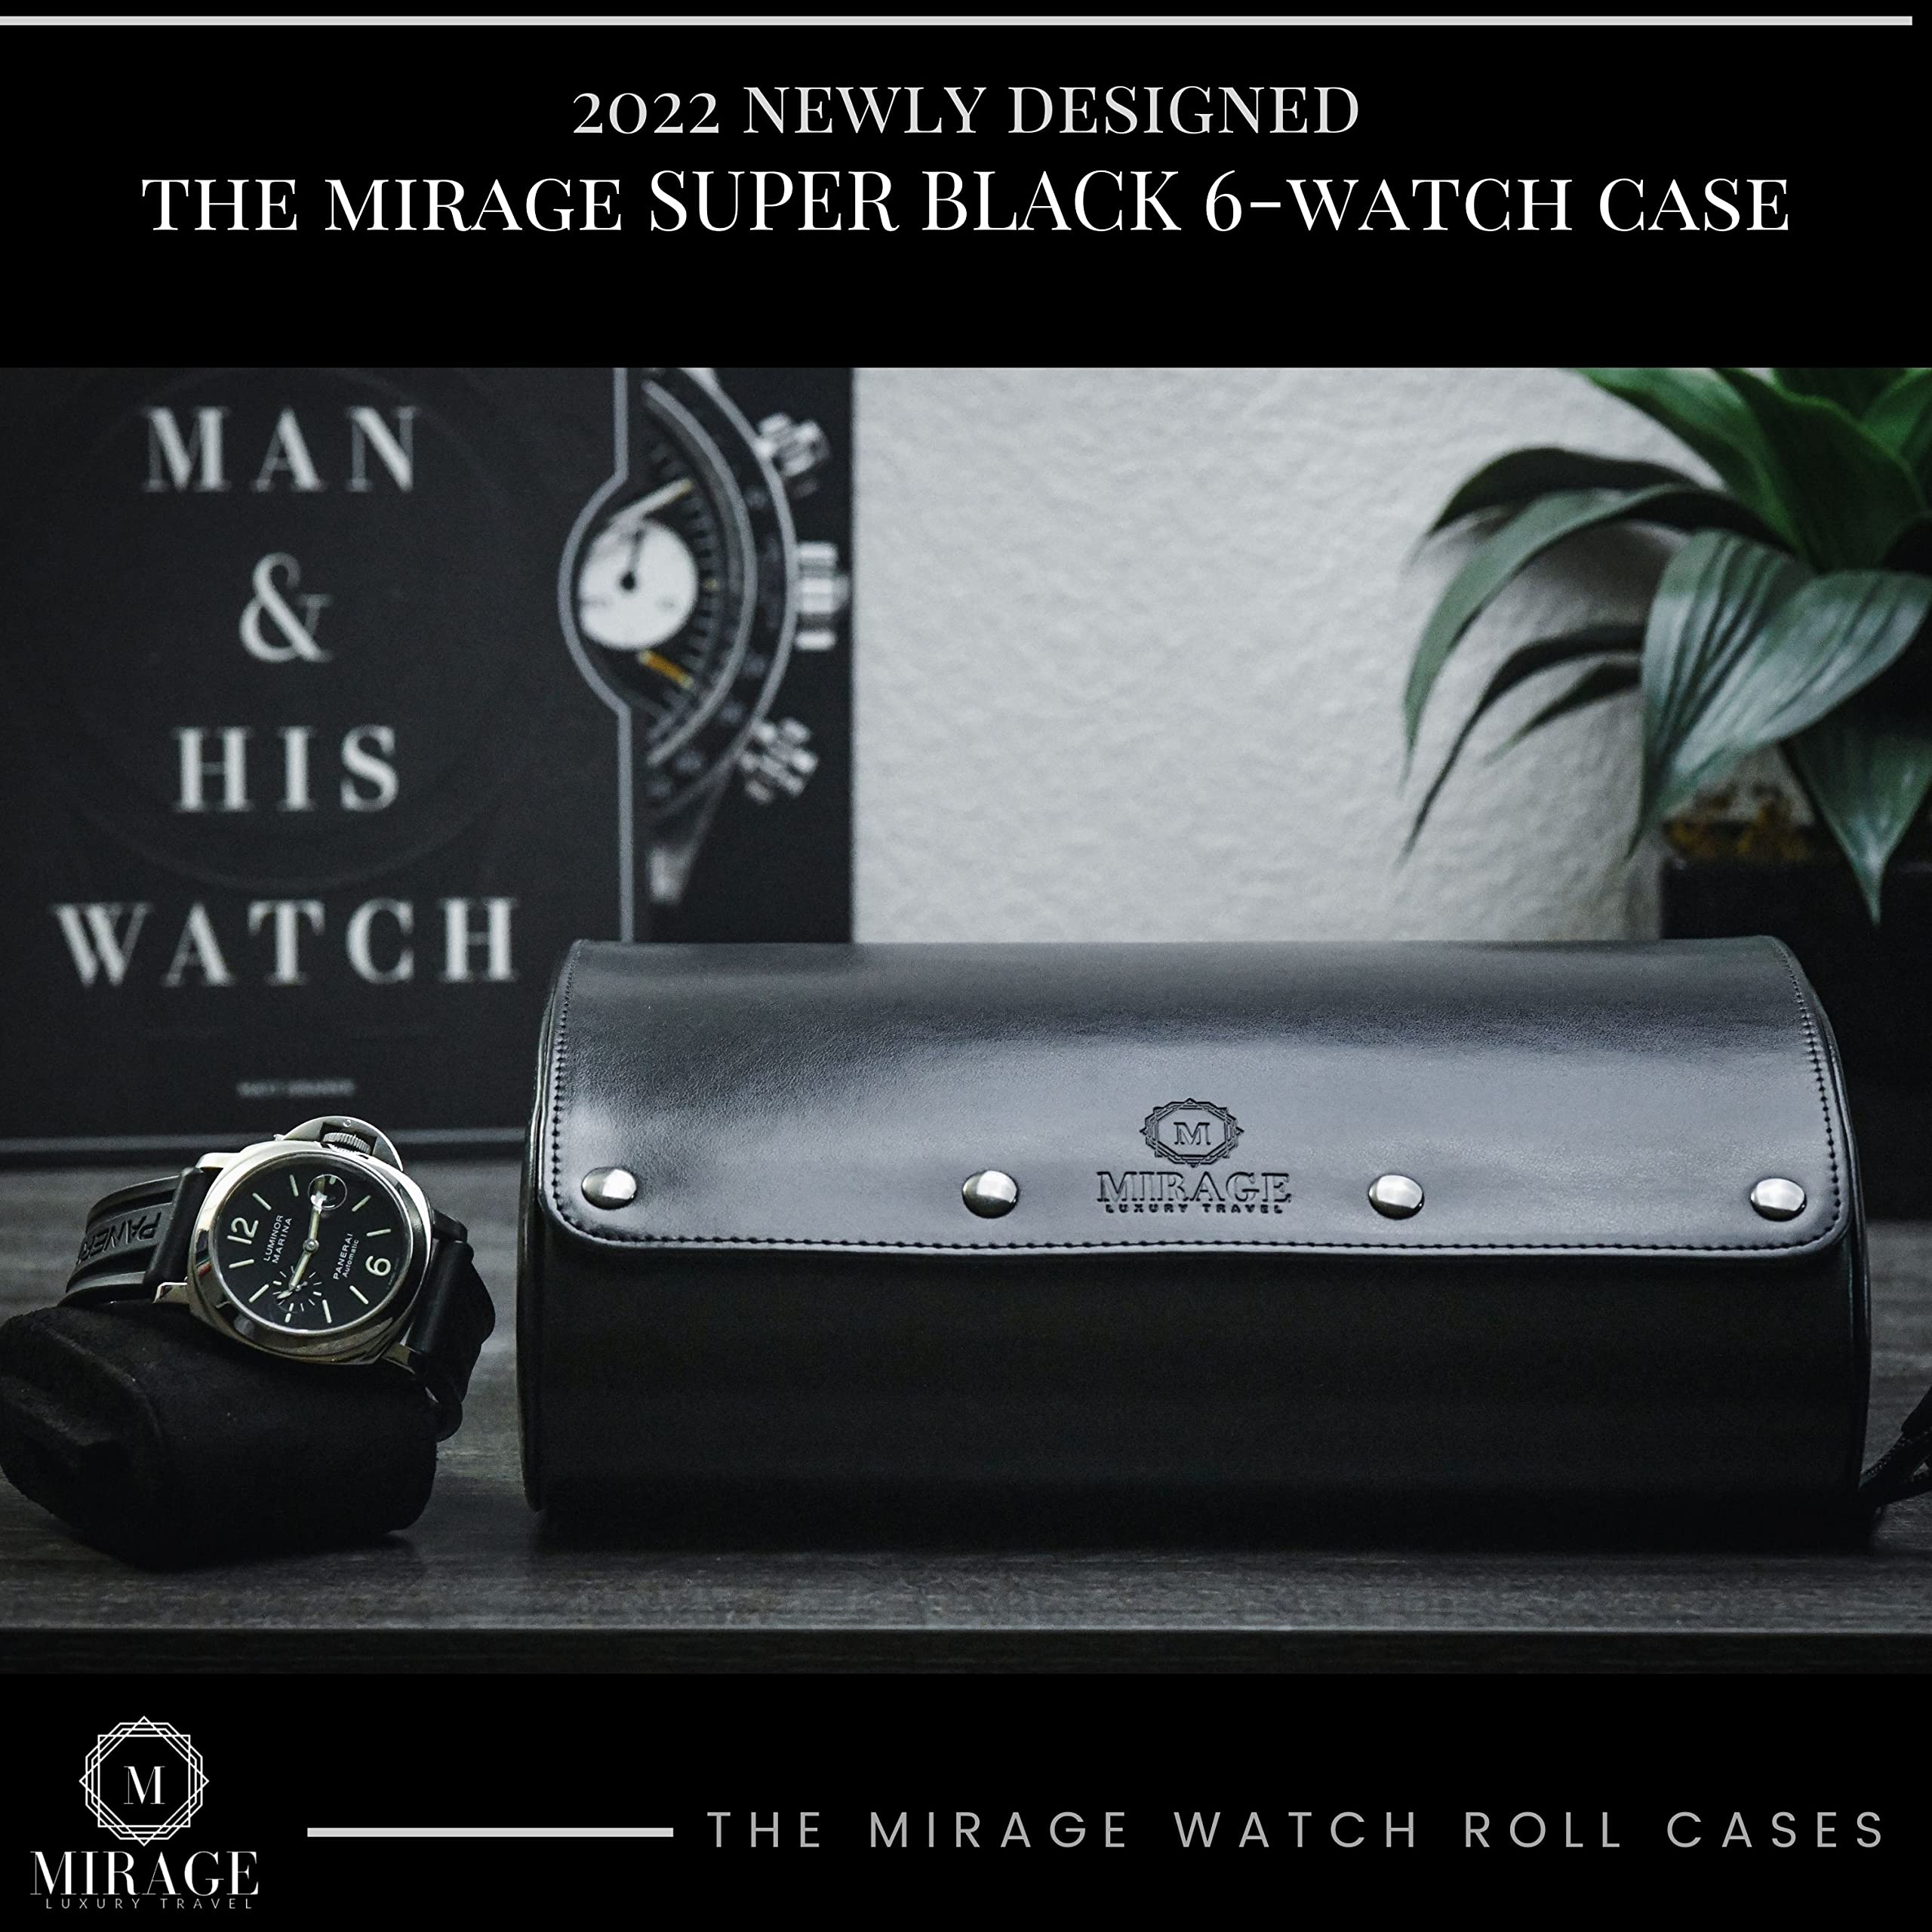 Black Watch Case for Men - 6-Watch Roll Travel Case by Mirage - Super Black Motif Design